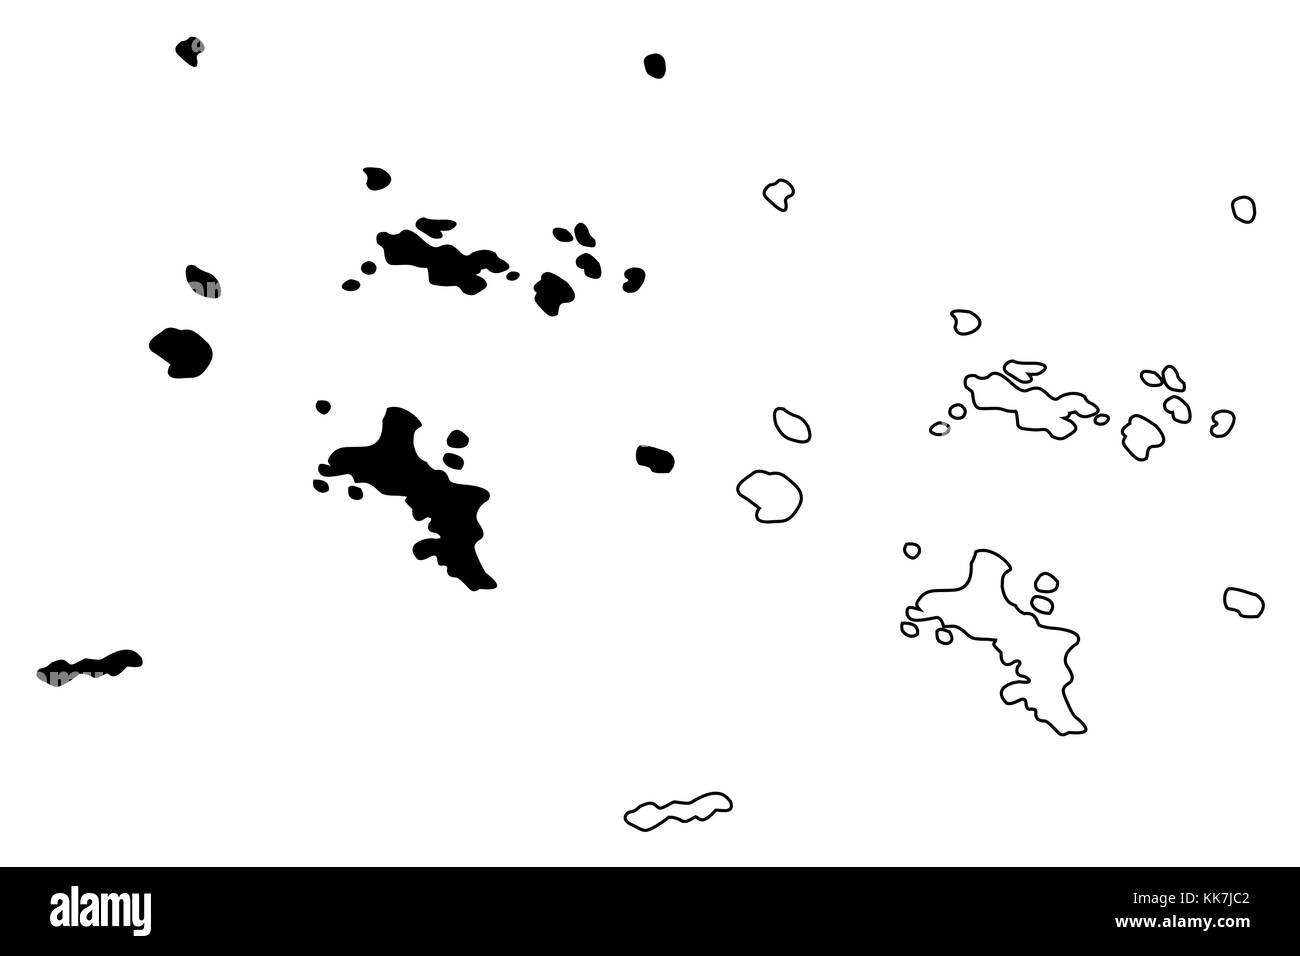 Seychellen Inseln Karte Vektor-illustration, kritzeln Skizze Republik Seychellen Stock Vektor